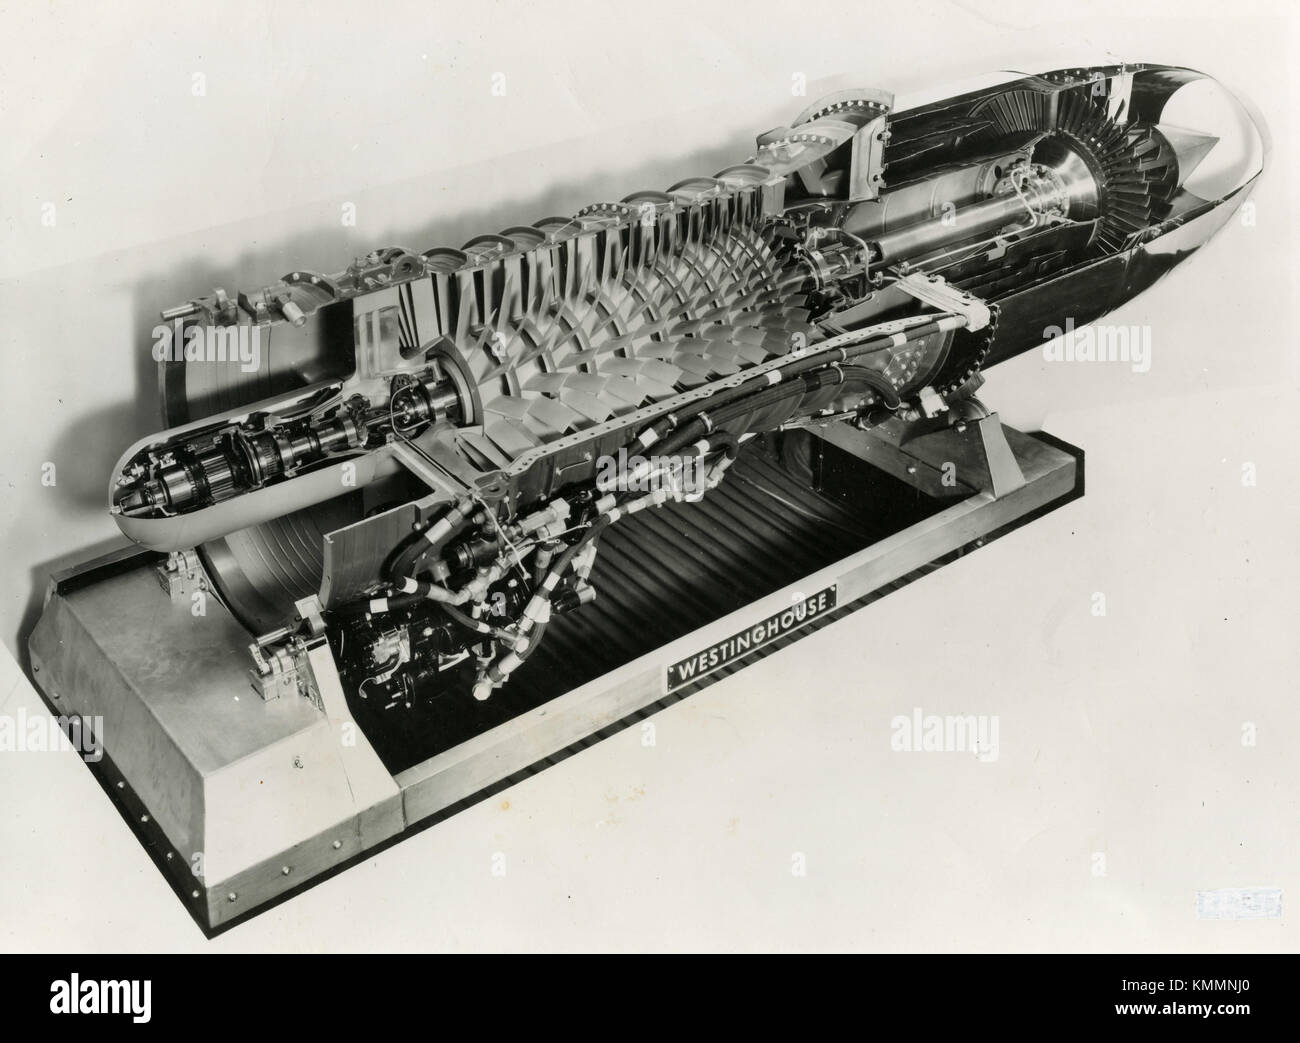 The Skyrocket Westinghouse J34 turbojet engine section, USA 1940s Stock Photo